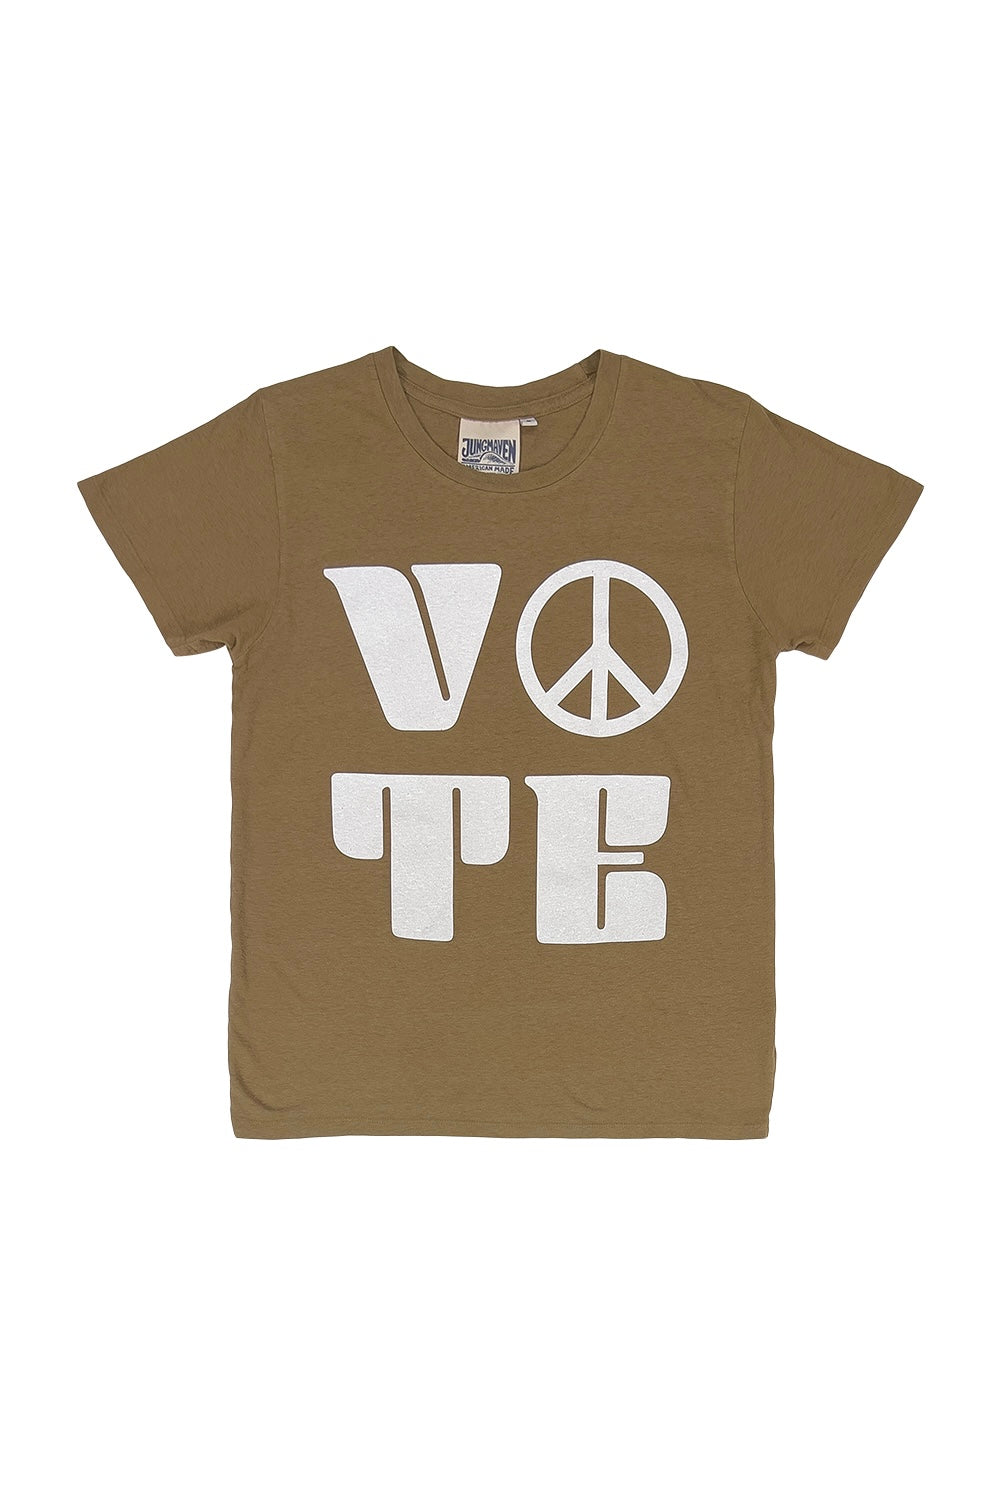 Vote Peace Lorel Tee | Jungmaven Hemp Clothing & Accessories / Color: Coyote